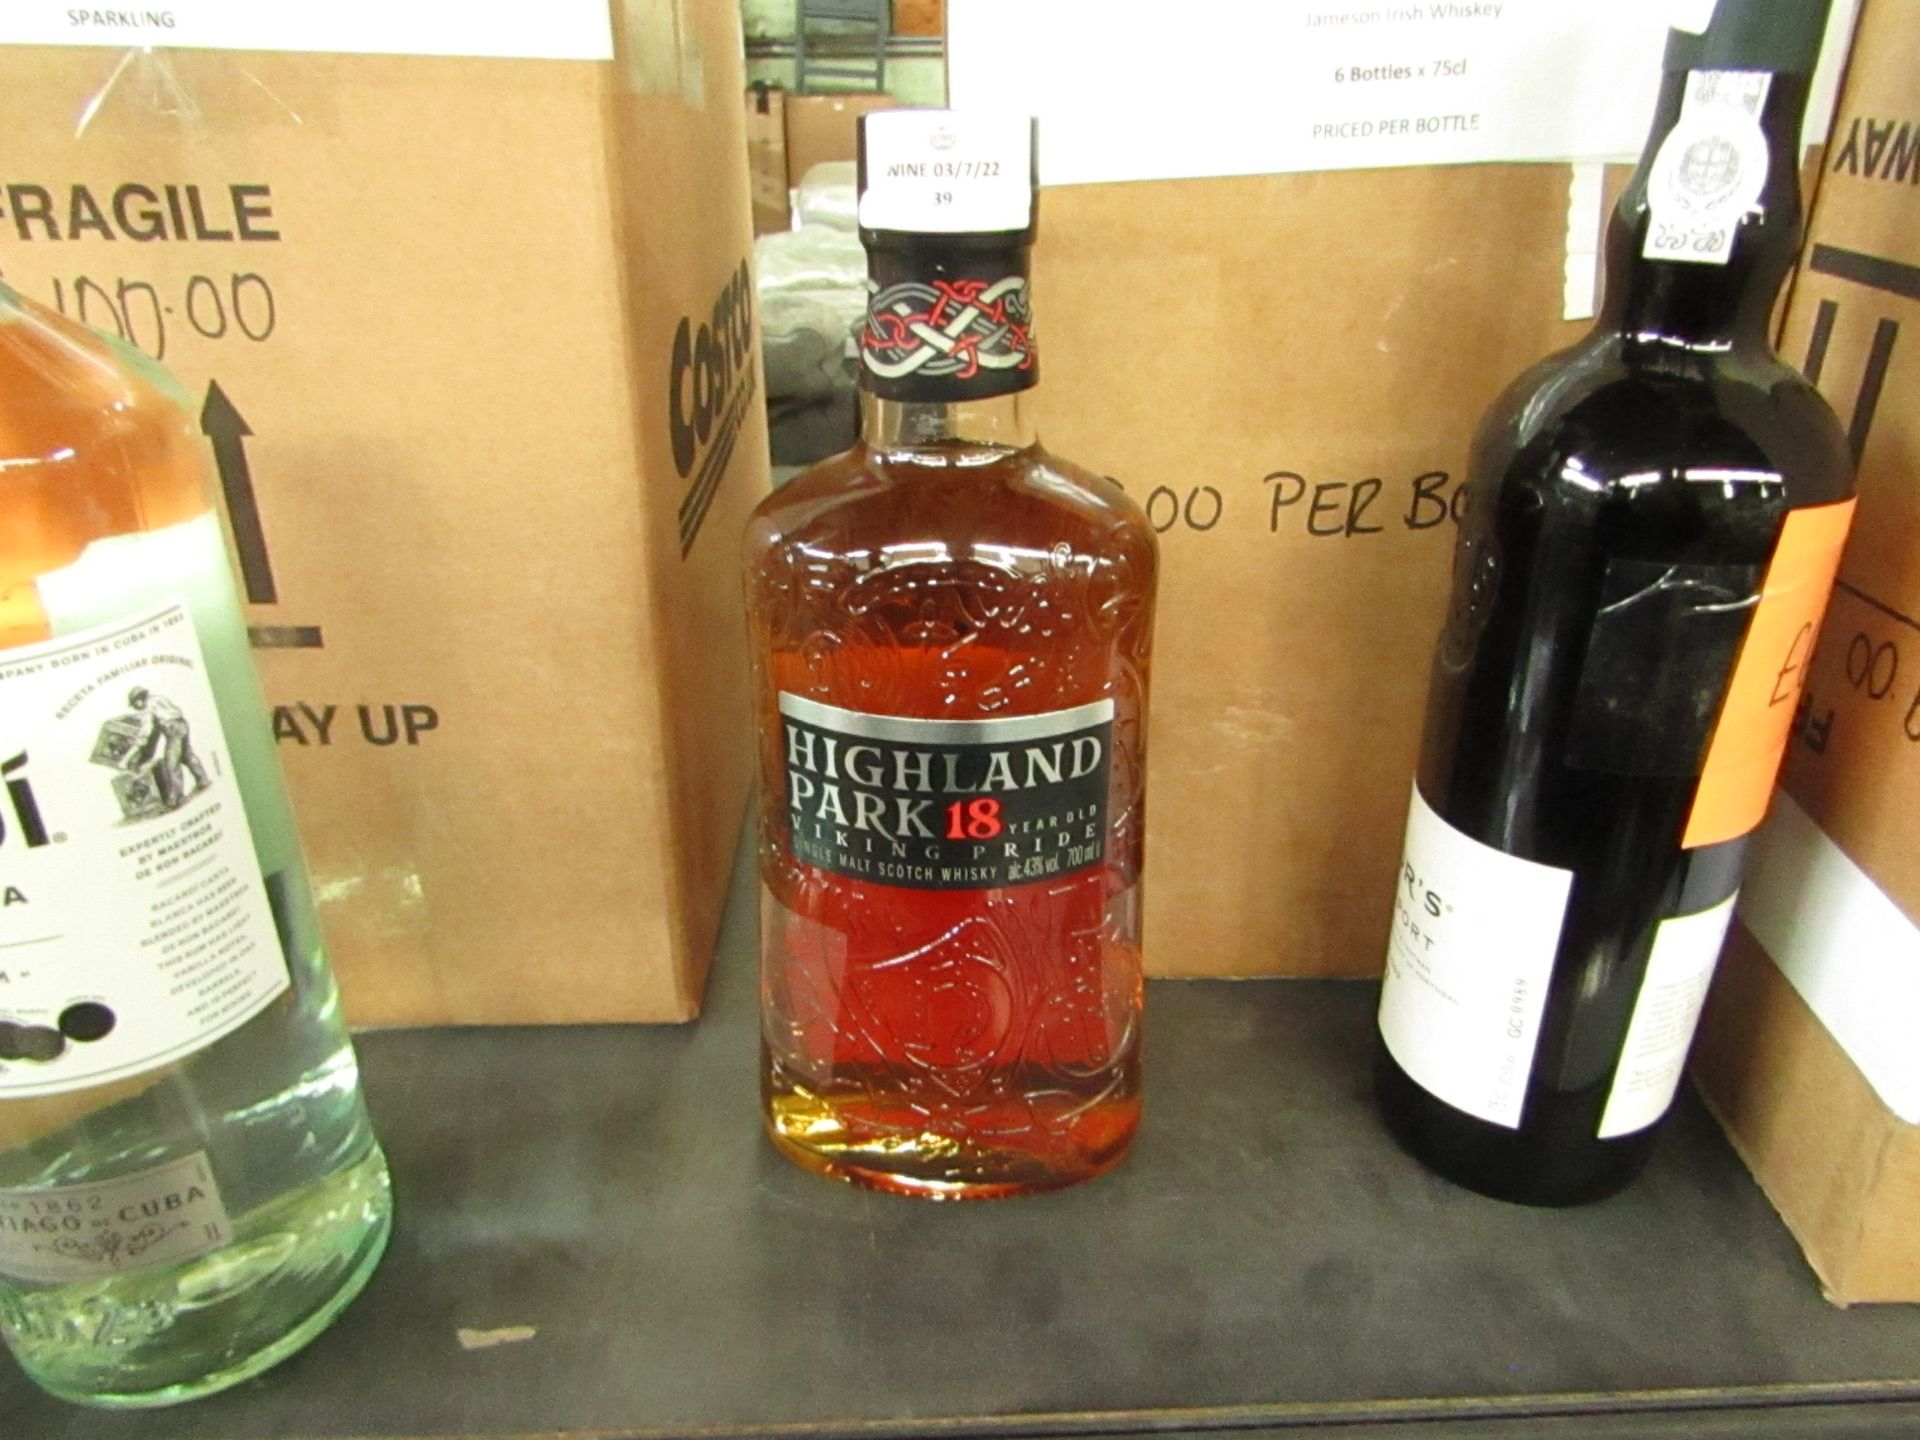 1x 70cl Bottle of Highland Park Viking Pride 18 Year Aged Single Malt Scotch Whiskey - RRP £90